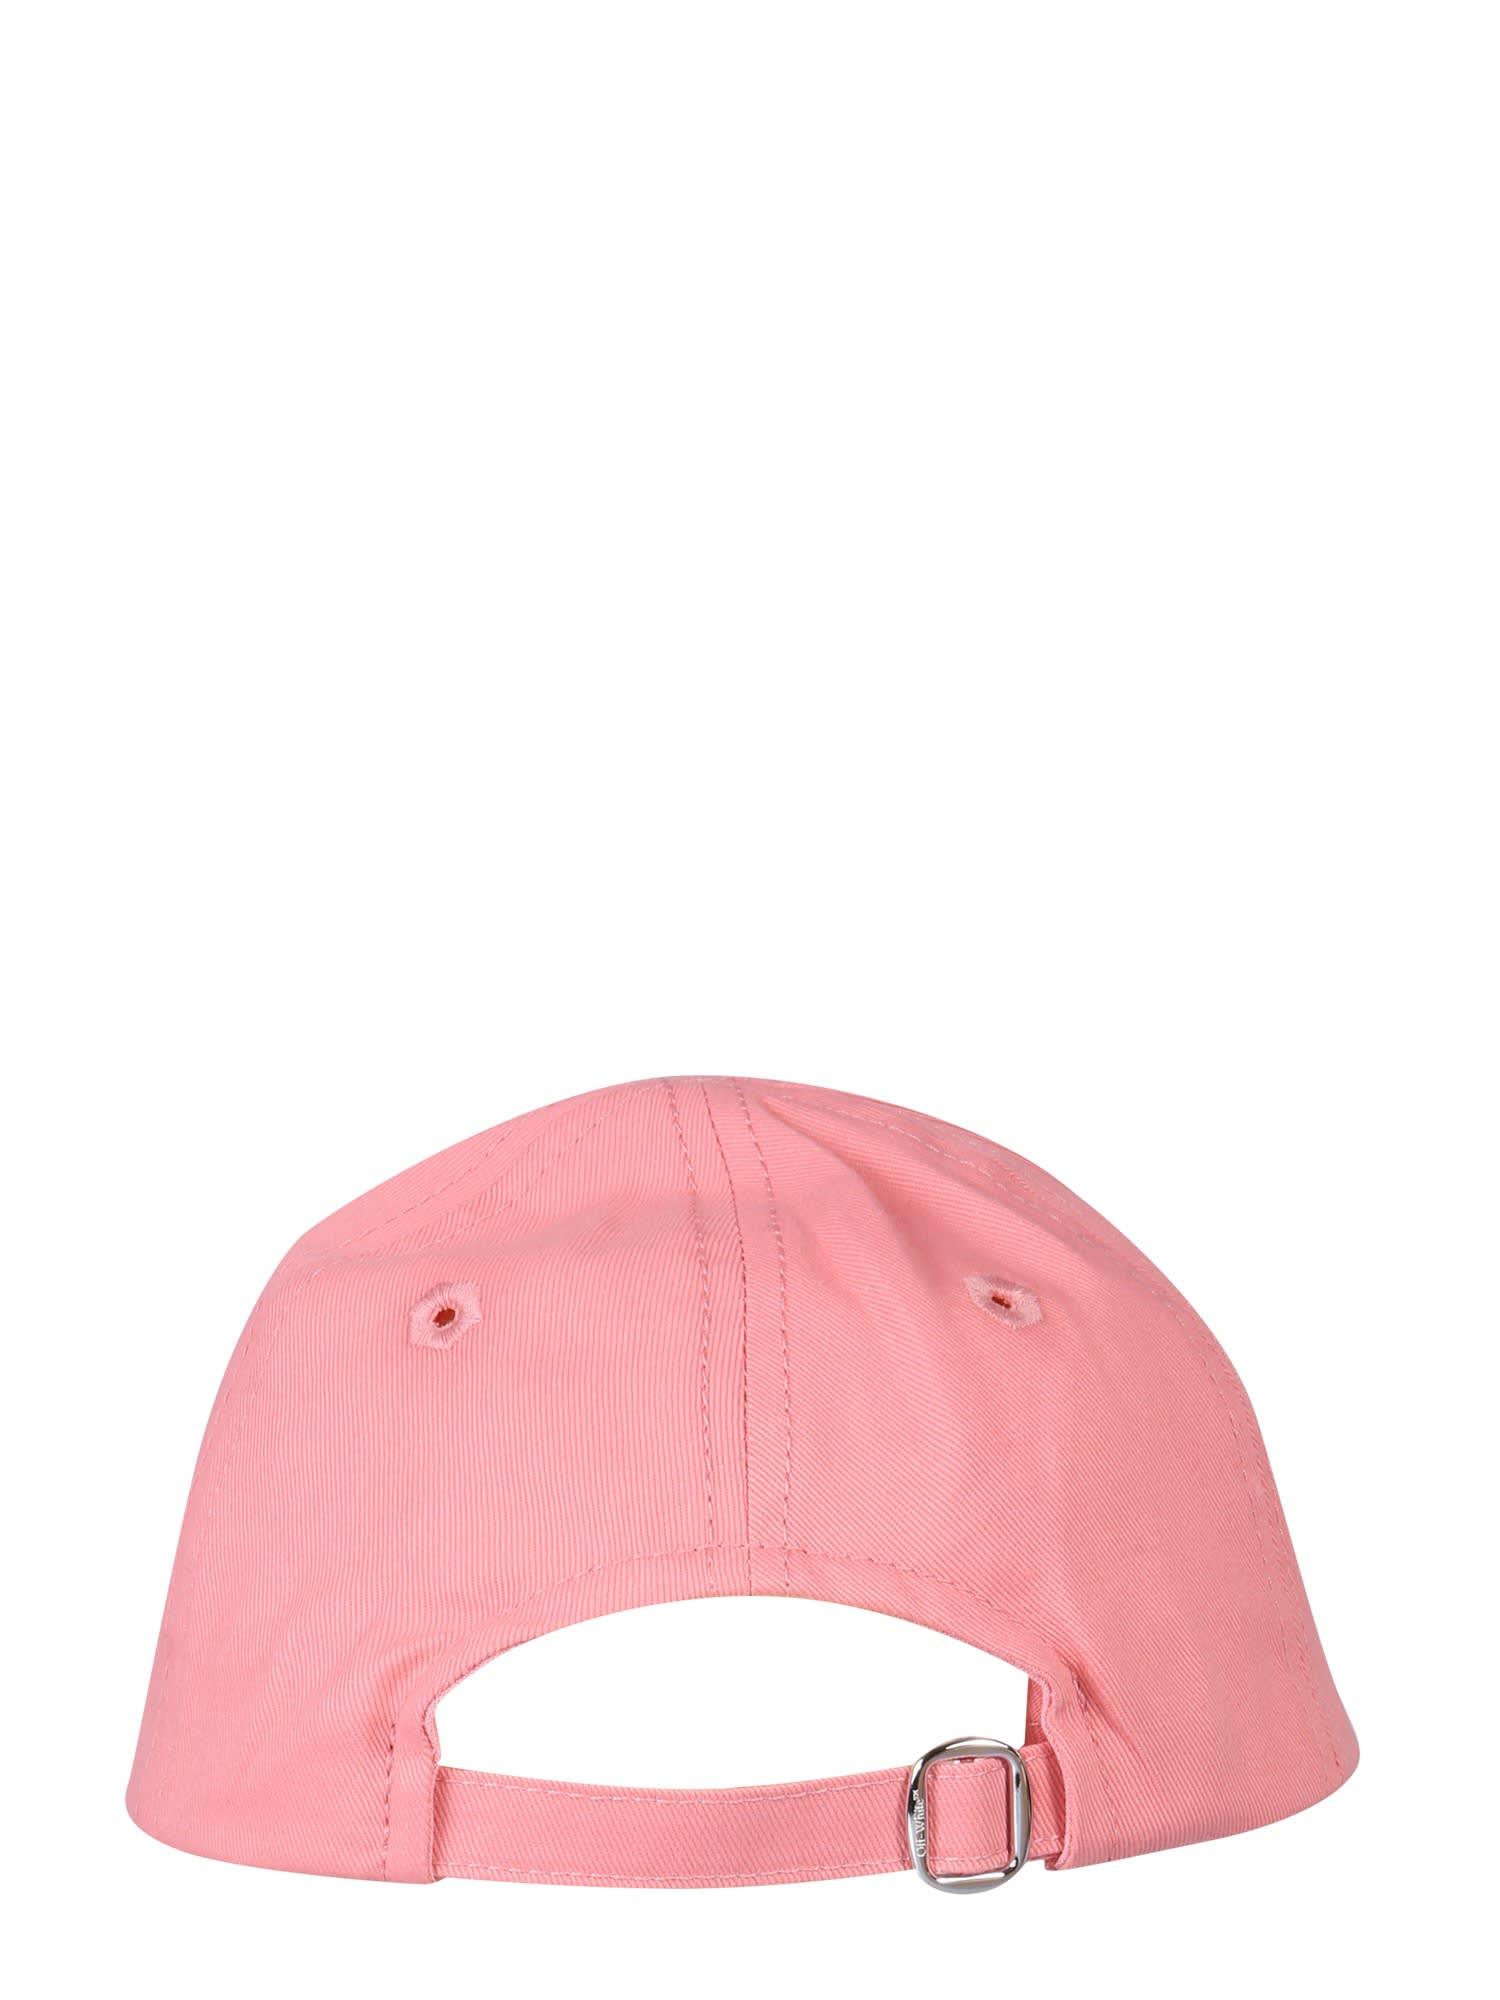 Off-White c/o Virgil Abloh Baseball Cap in Pink | Lyst